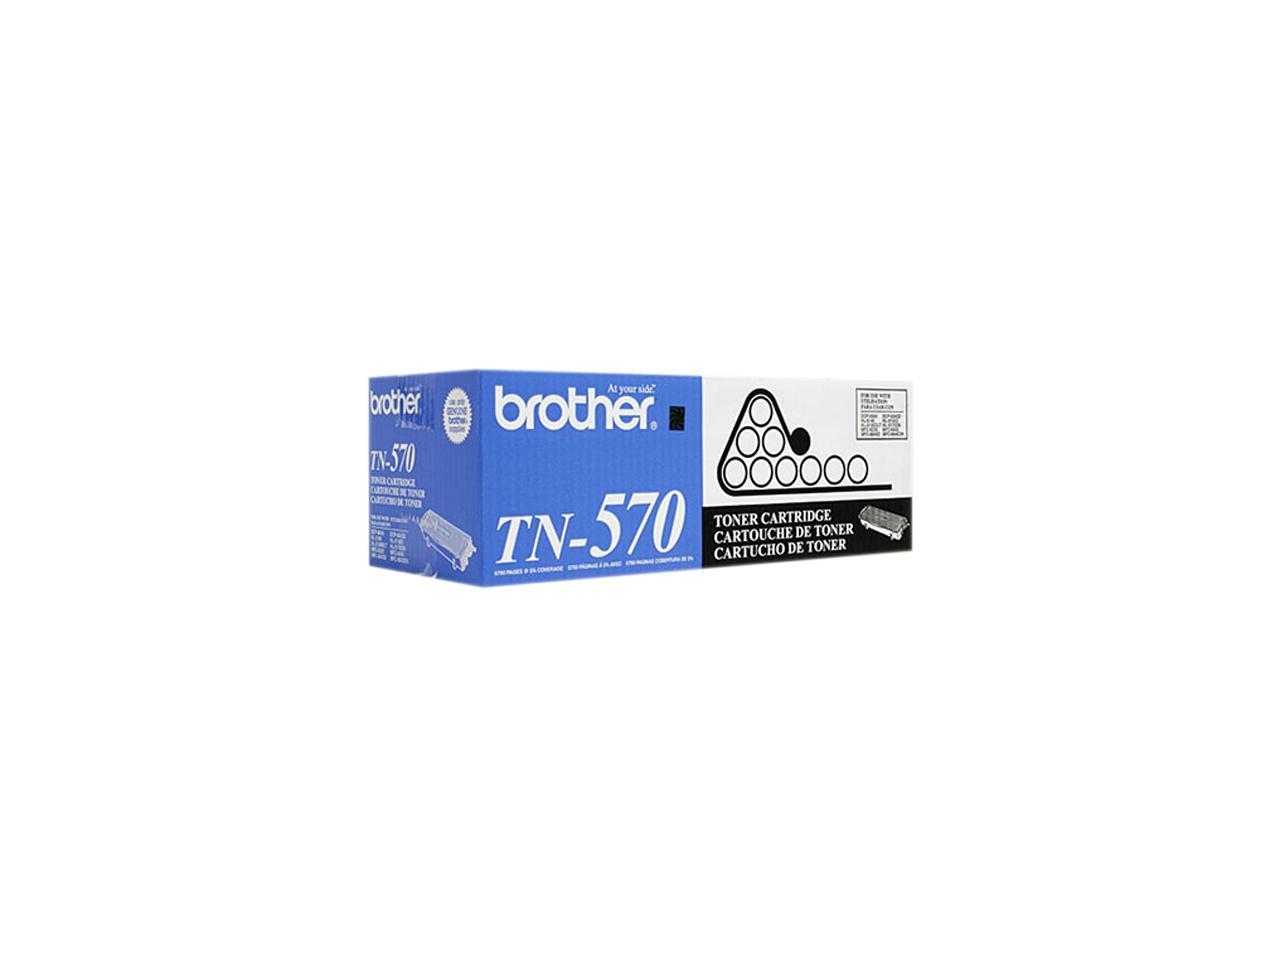 Brother TN570 High Yield Toner Cartridge - Black